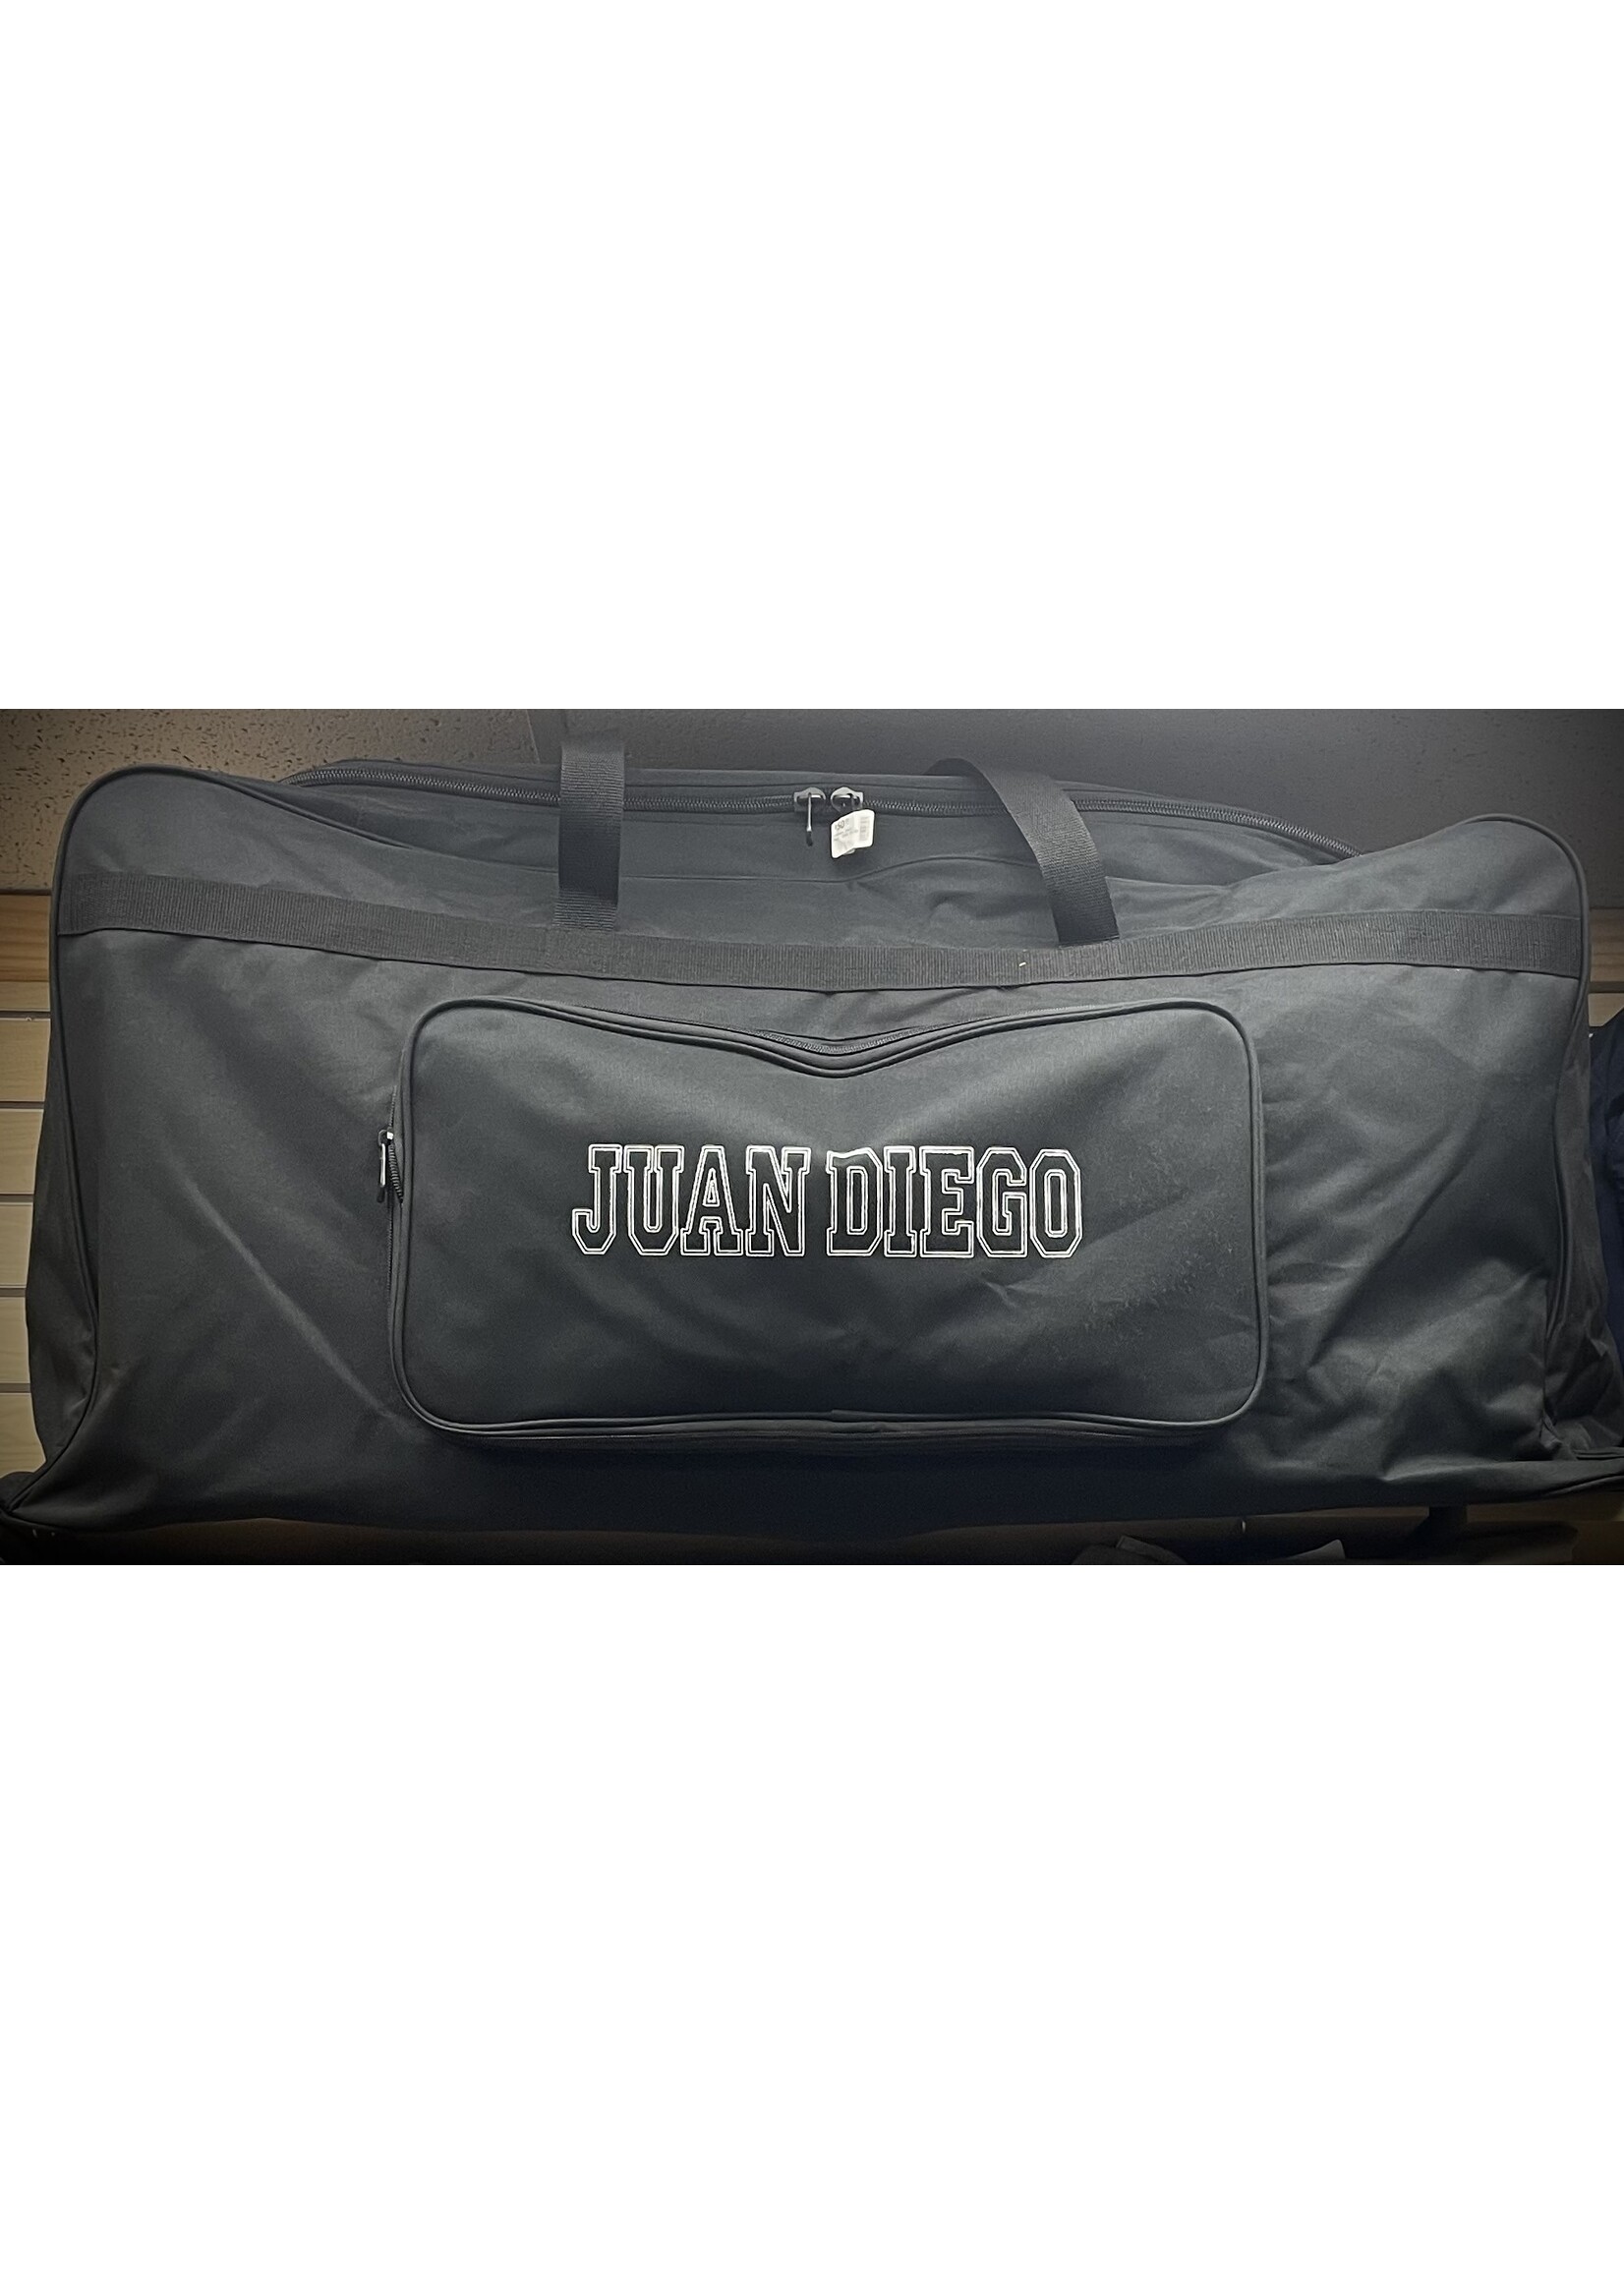 NON-UNIFORM Large Equipment Bag, Duffle